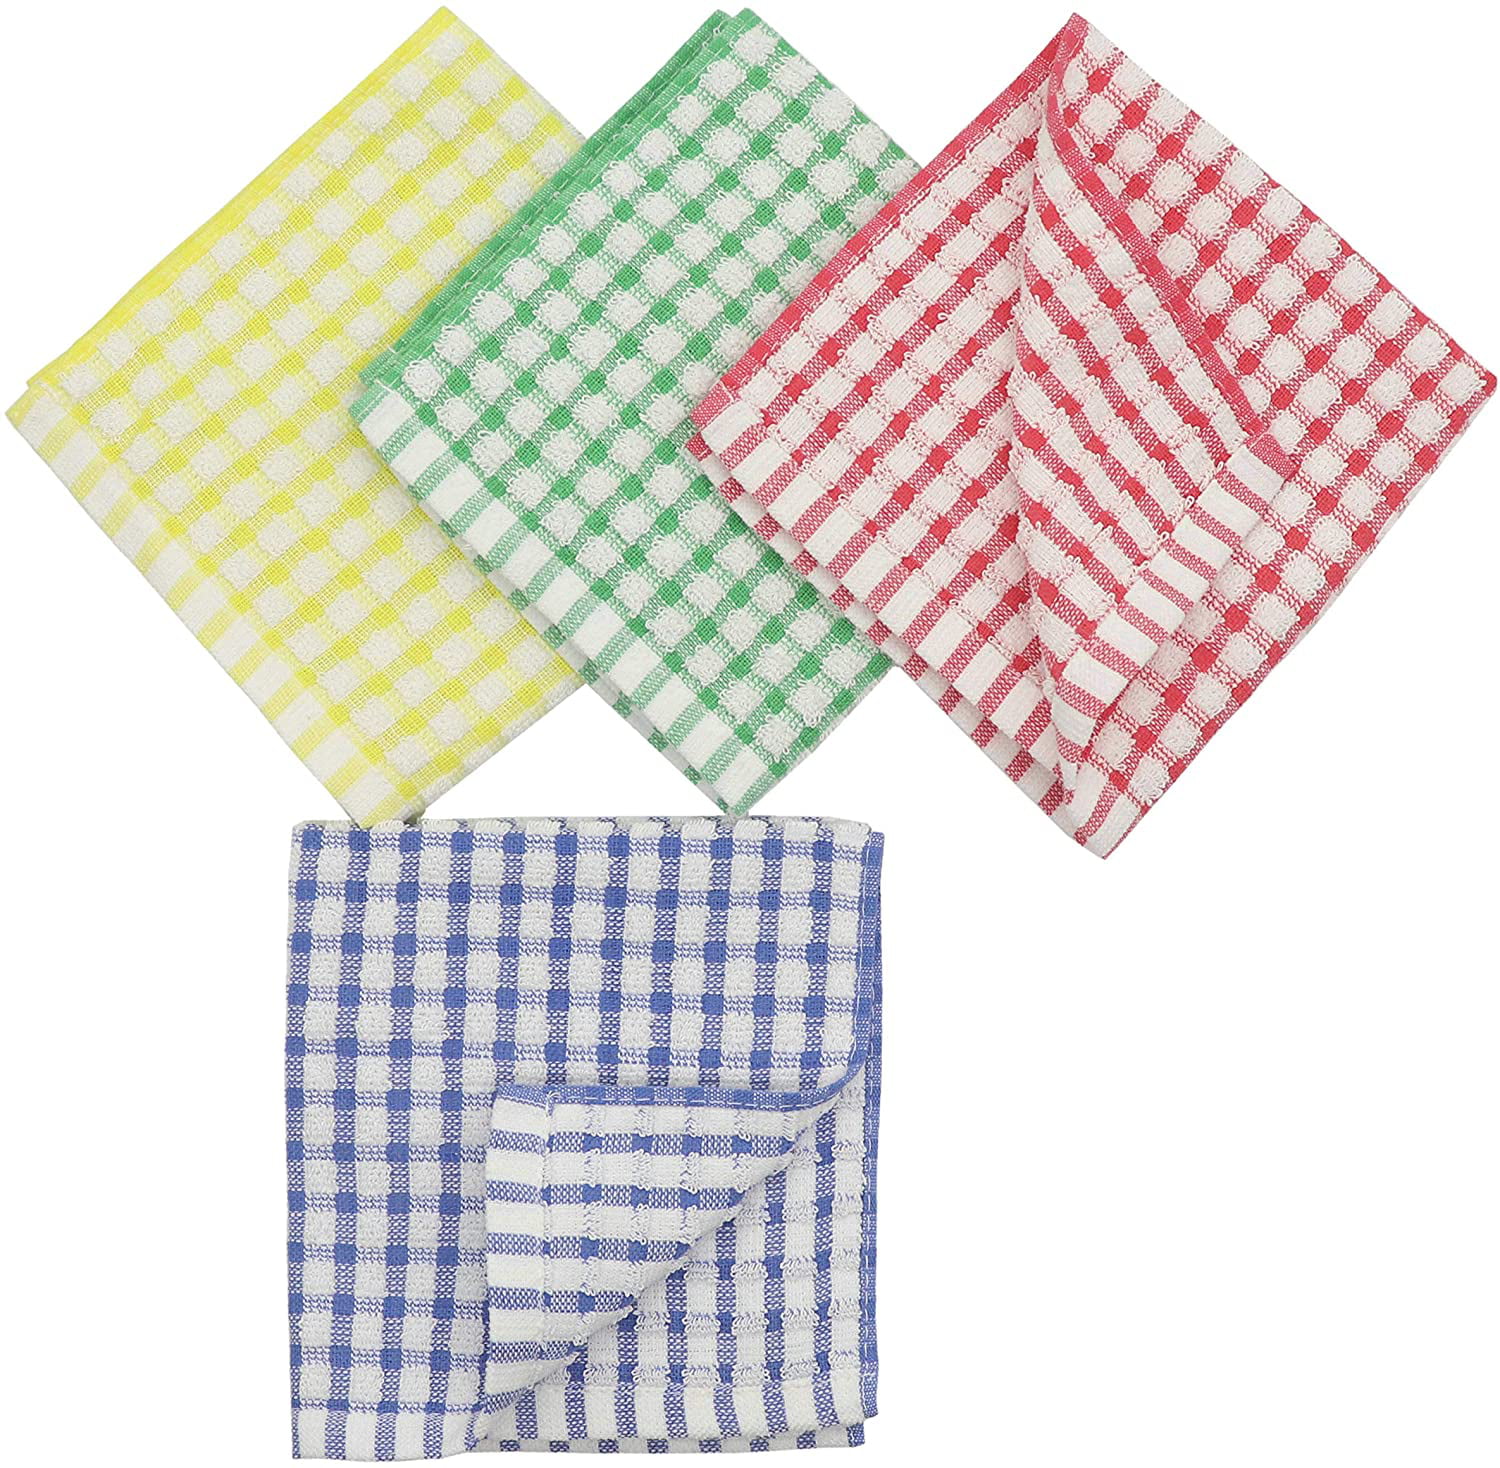 Kitchen Dishcloths 12pcs 11x12 Inches Bulk Cotton Kitchen Dish Cloths Scrubbing Wash Sets (Mix color)